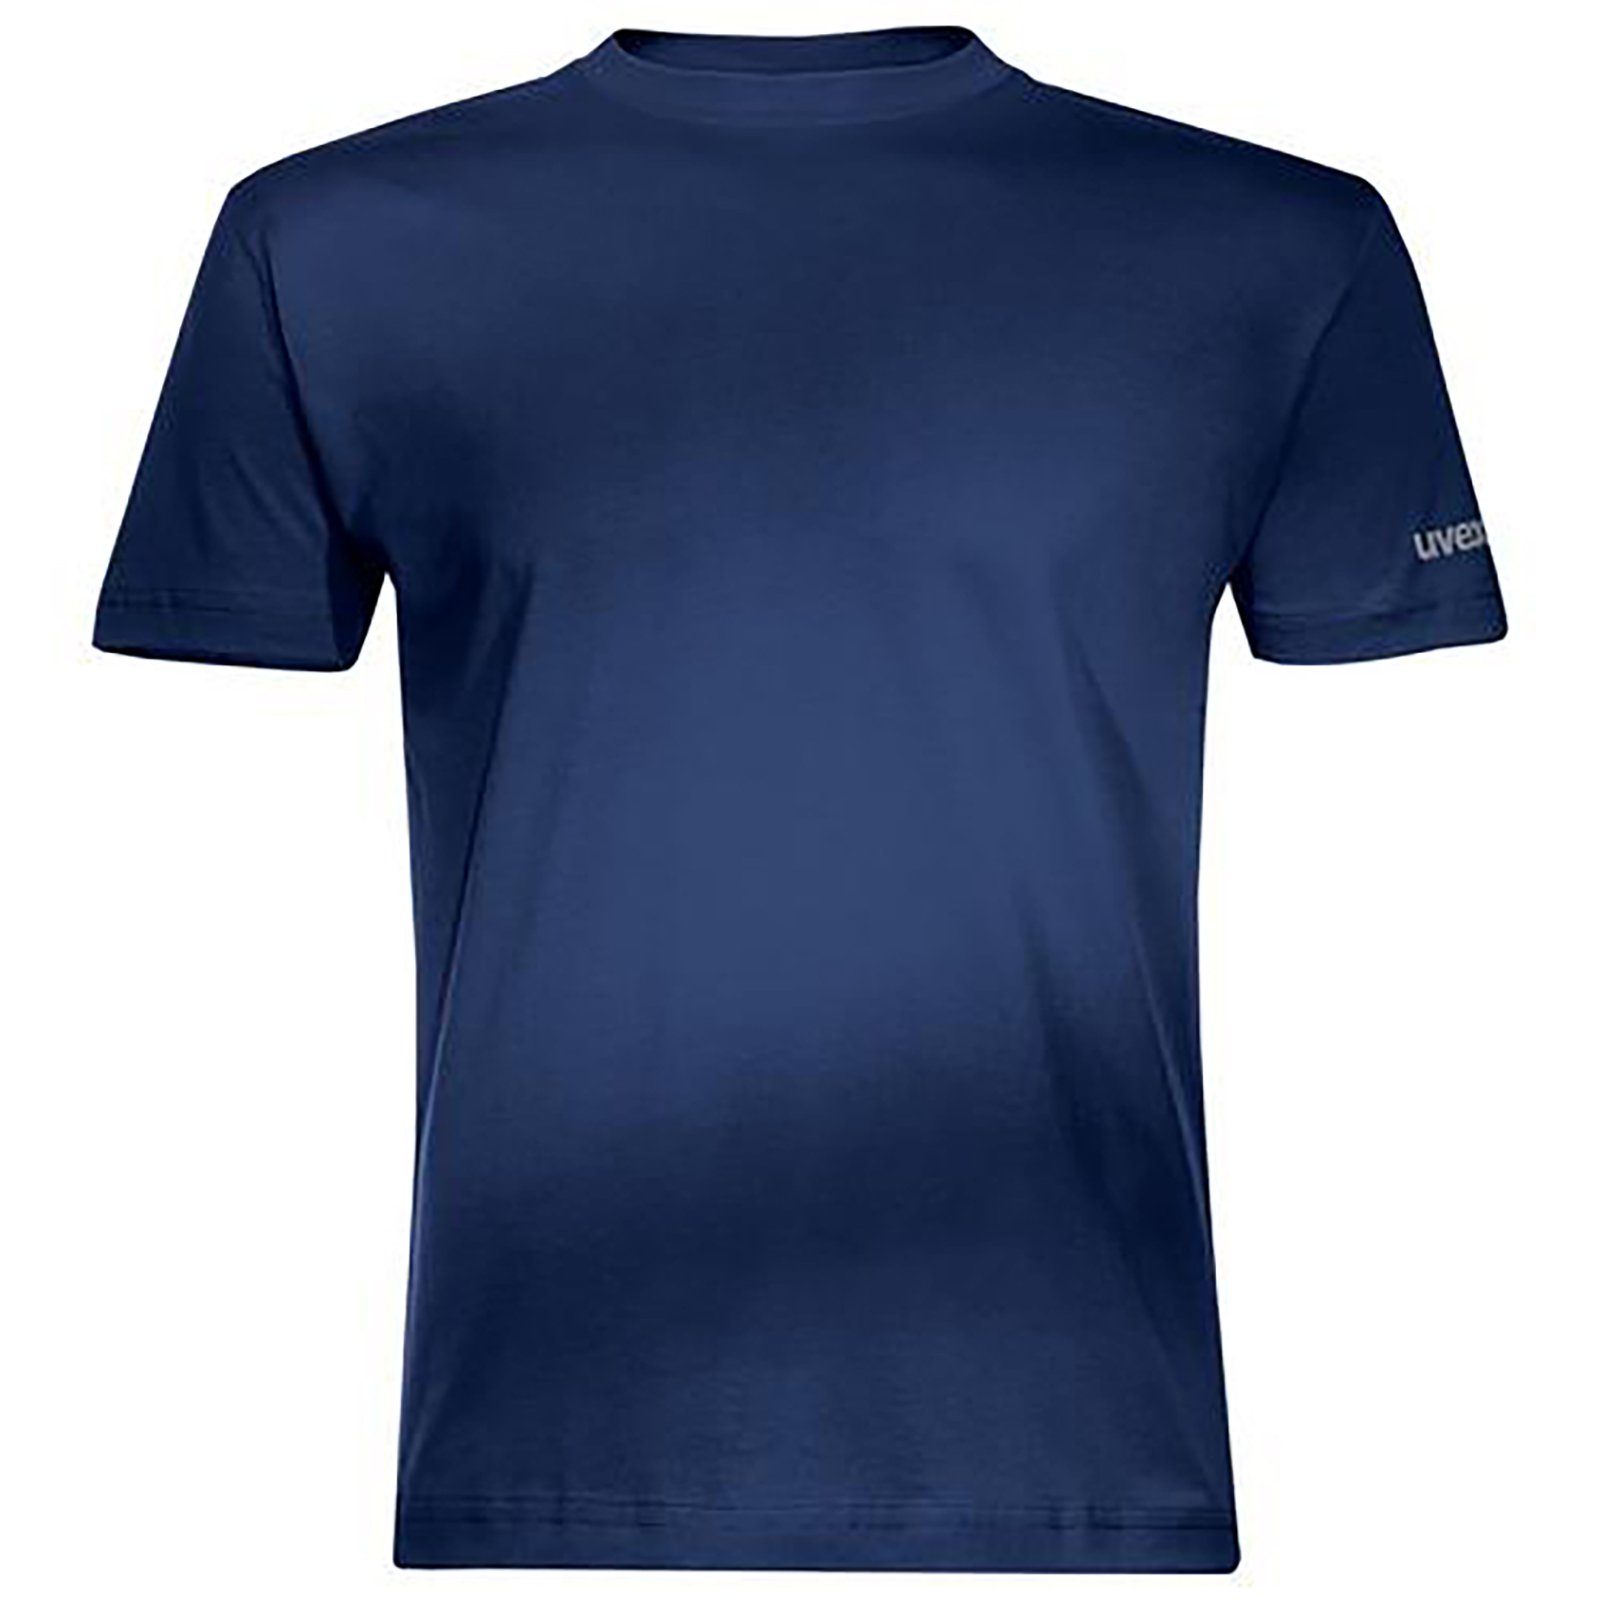 Uvex T-Shirt T-Shirt blau, navy